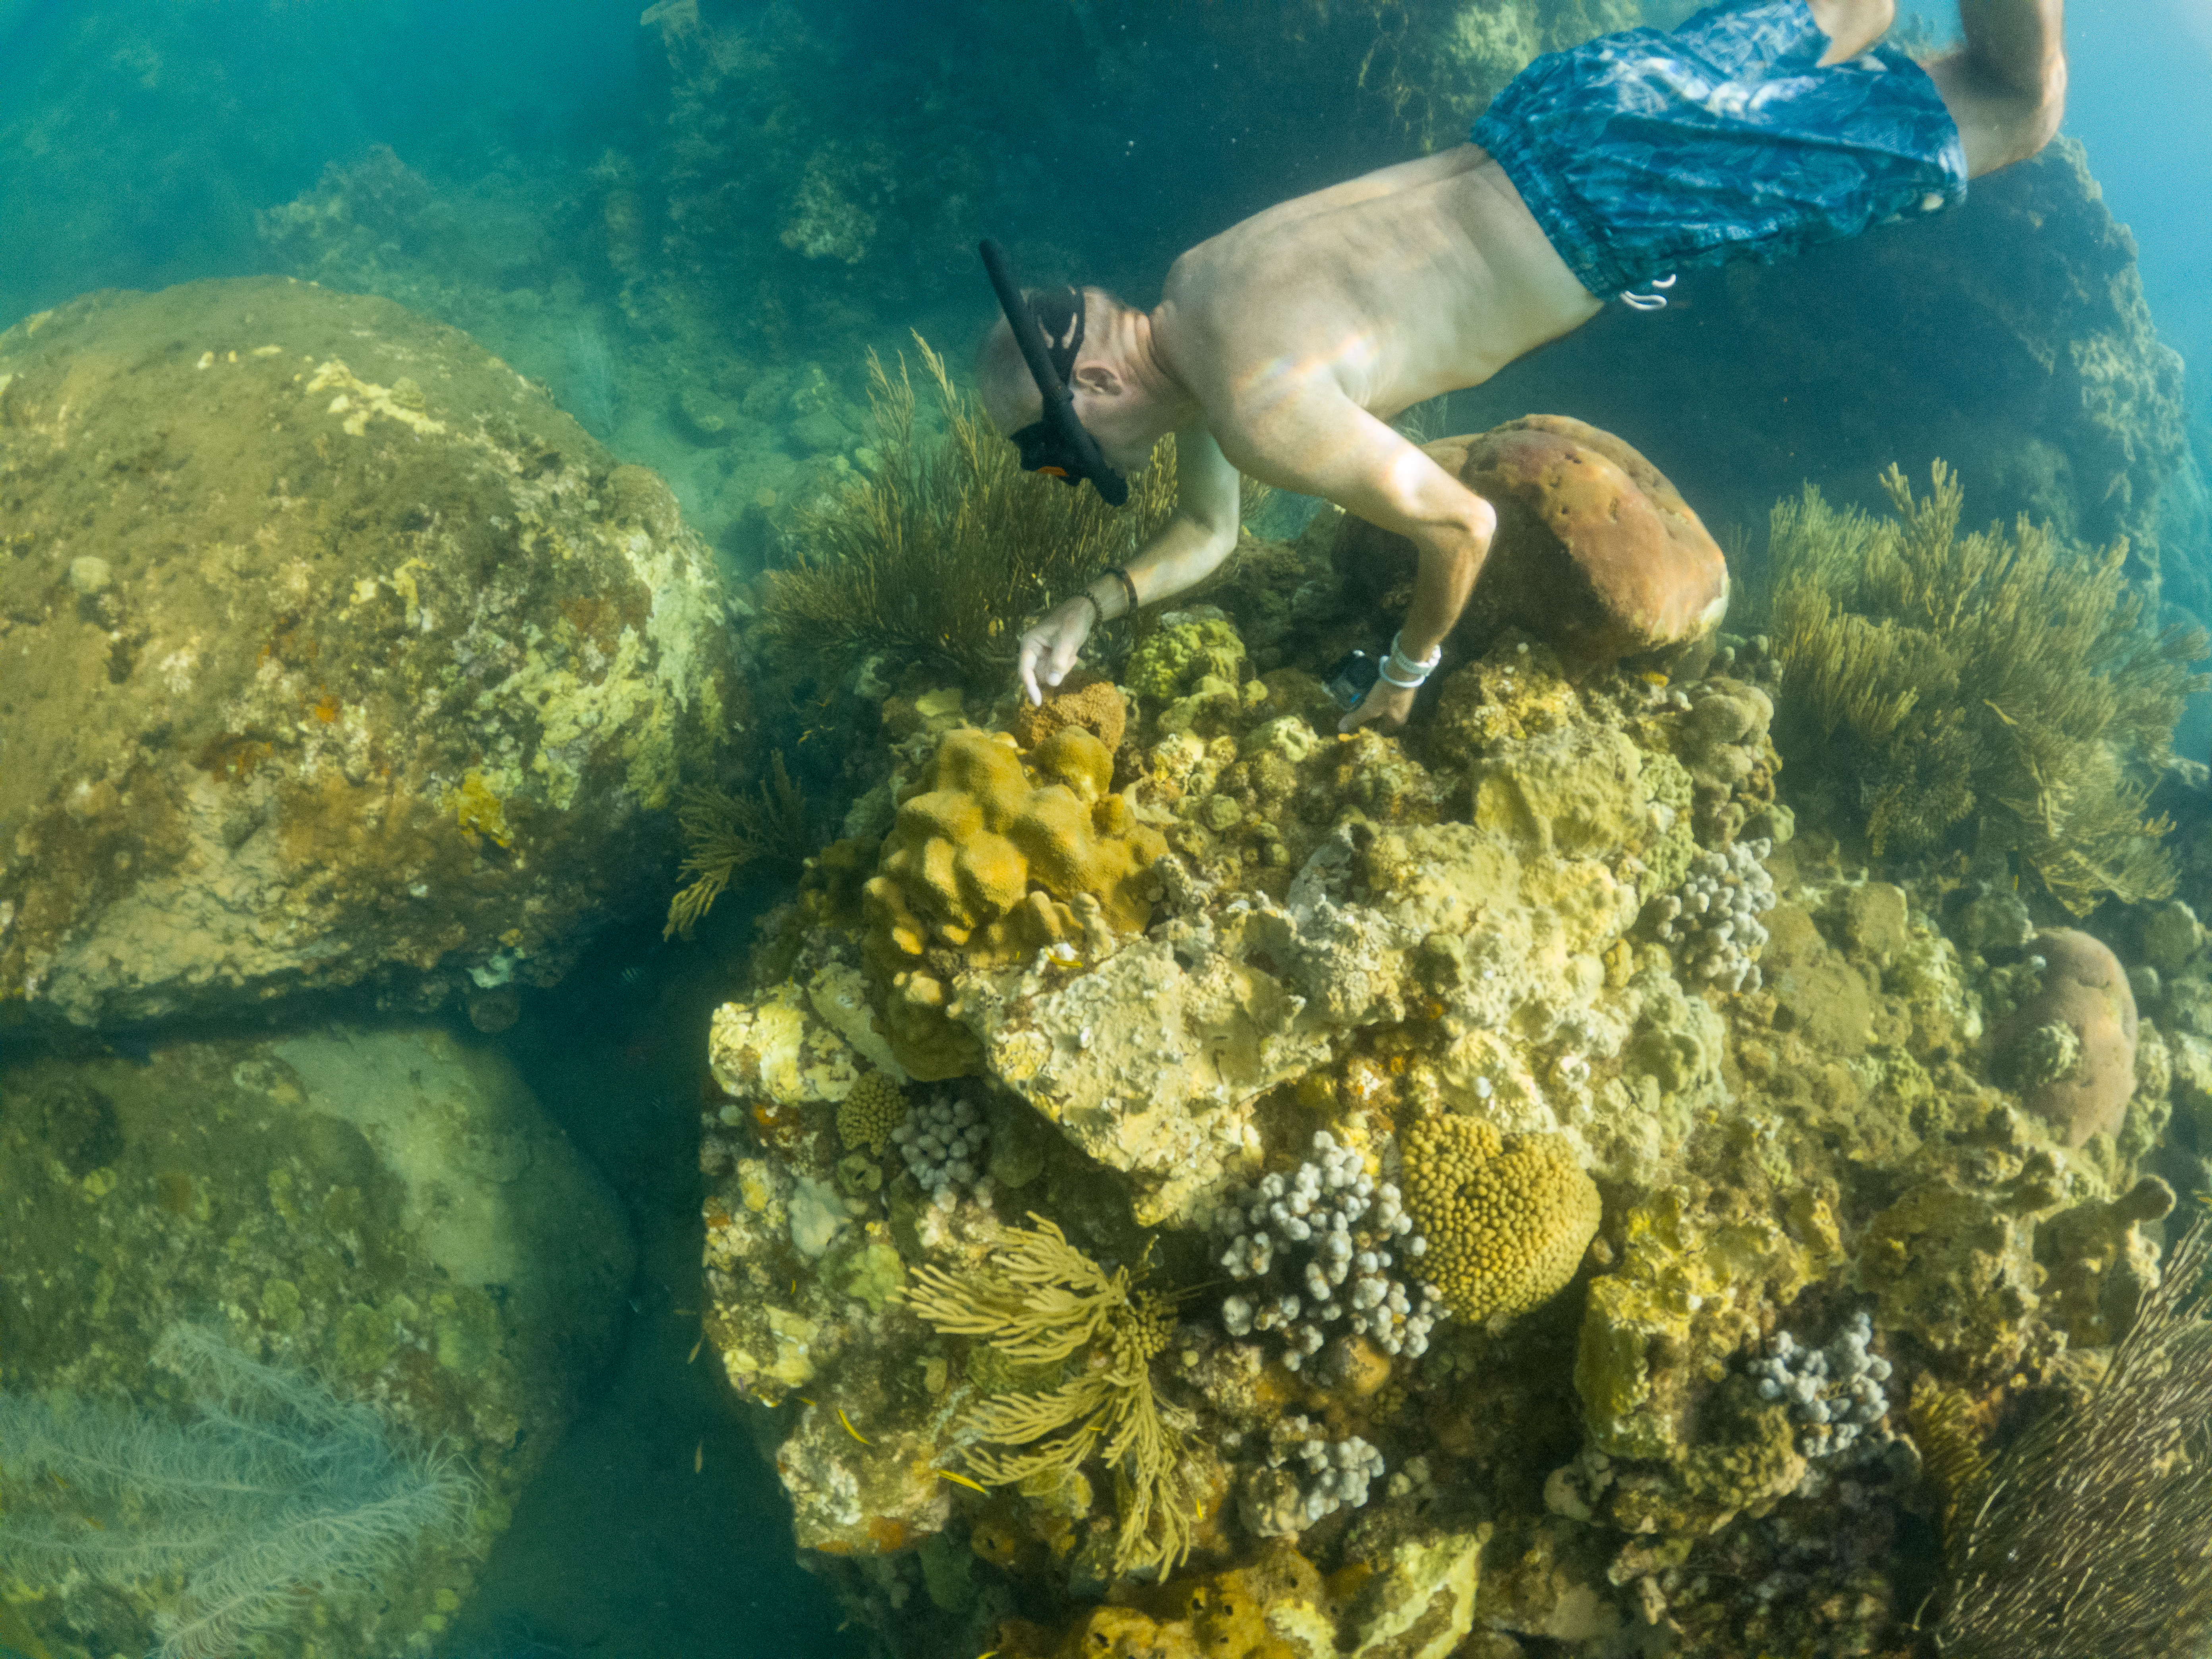 Snorkeler among yellowish coral.